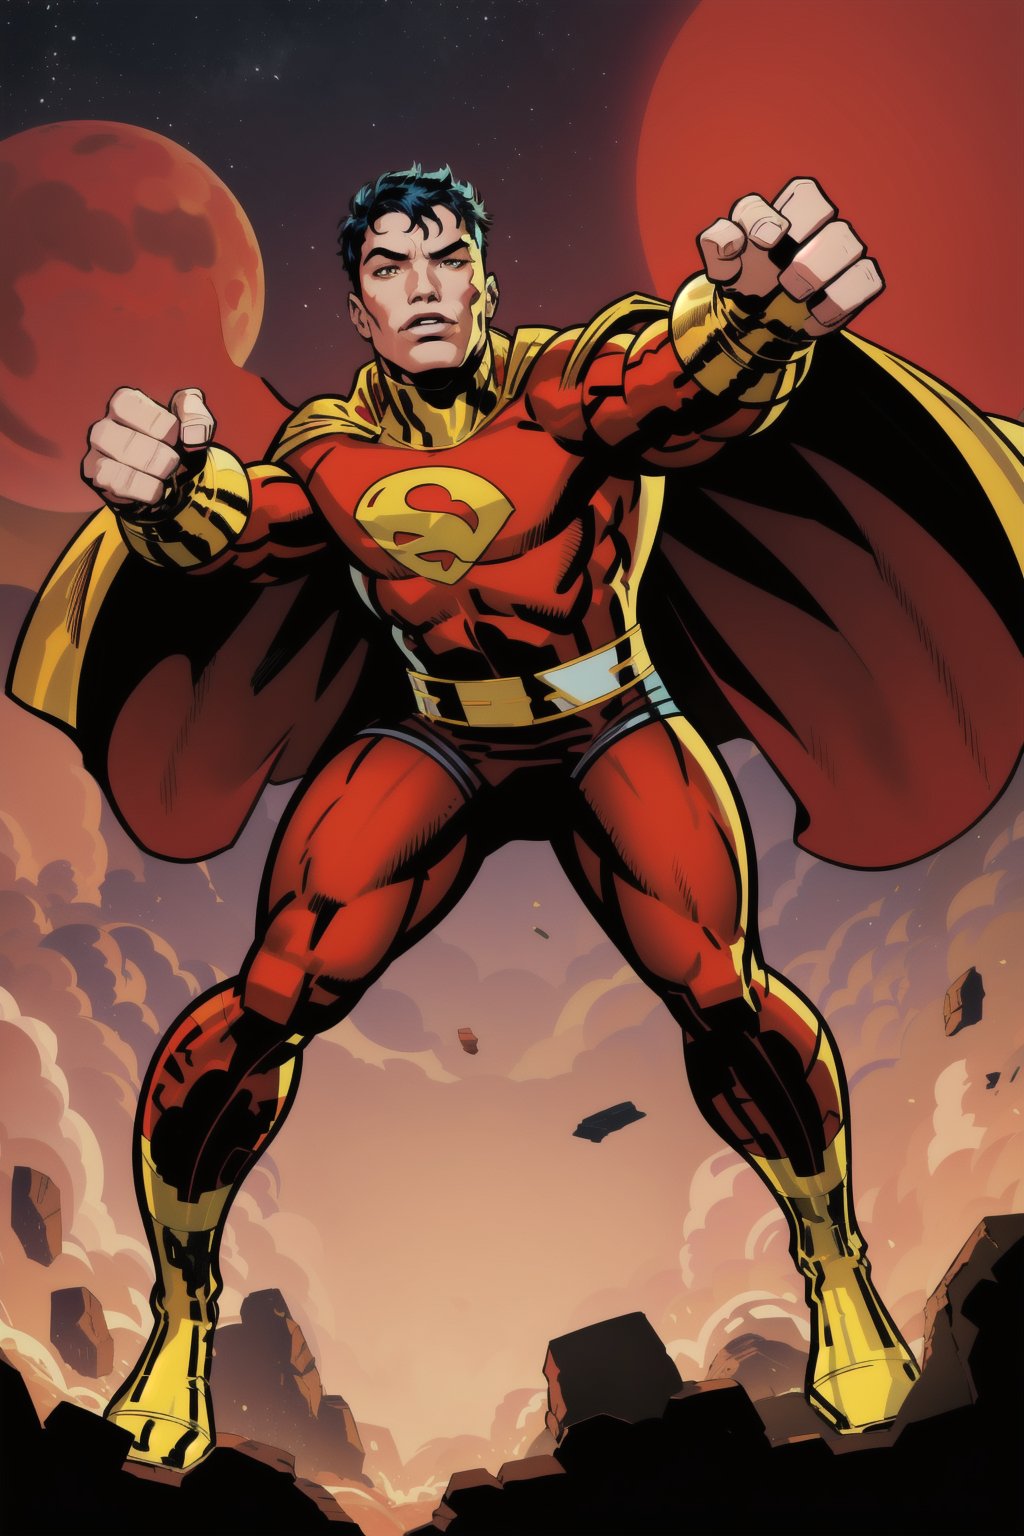 Full body,1man, superhero, flying, red and yellow superhero costume with cape,cartoon